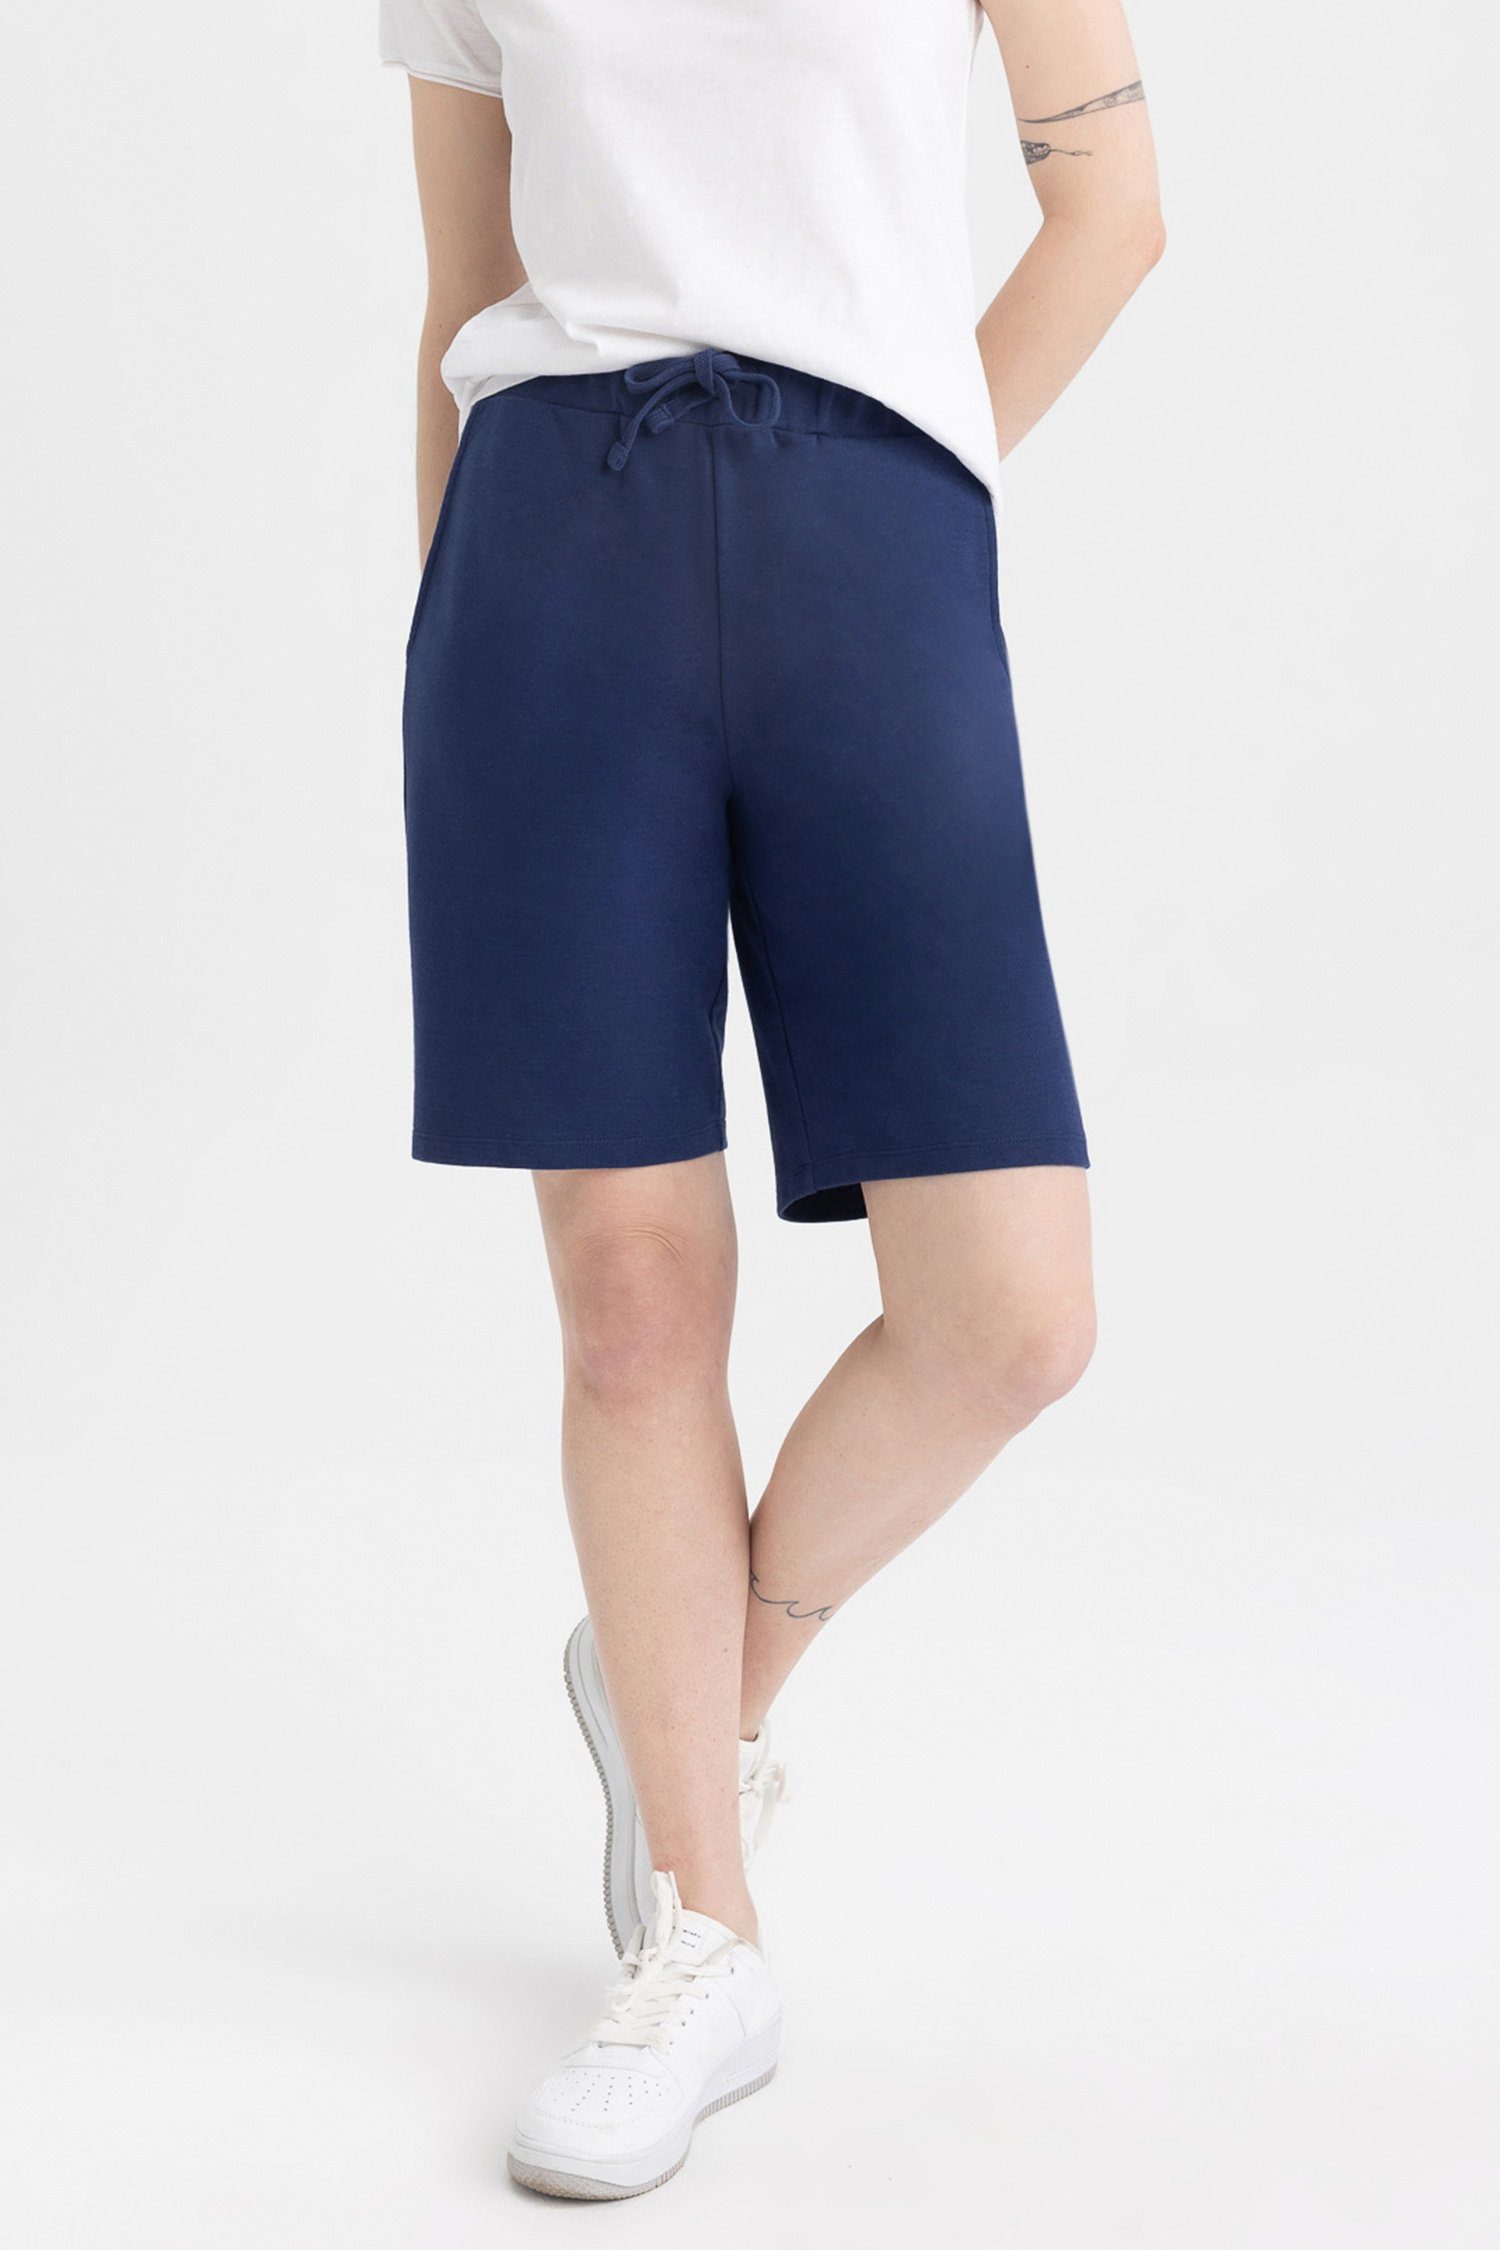 DeFacto Shorts Damen REGULAR Shorts FIT Marineblau